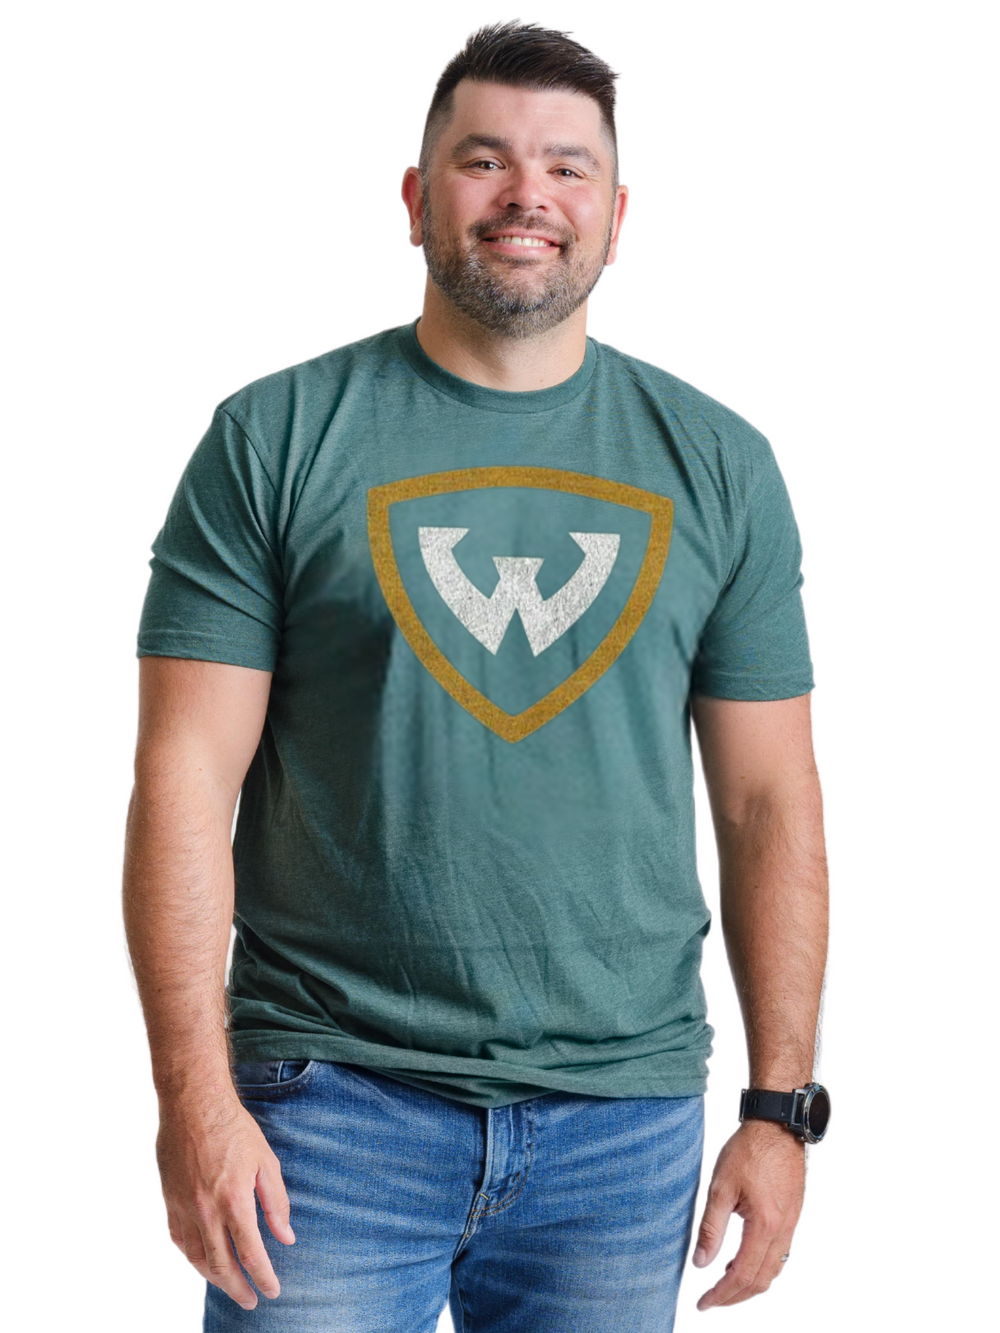 Wayne State University Block W Logo on Green Premium T-Shirt on male model